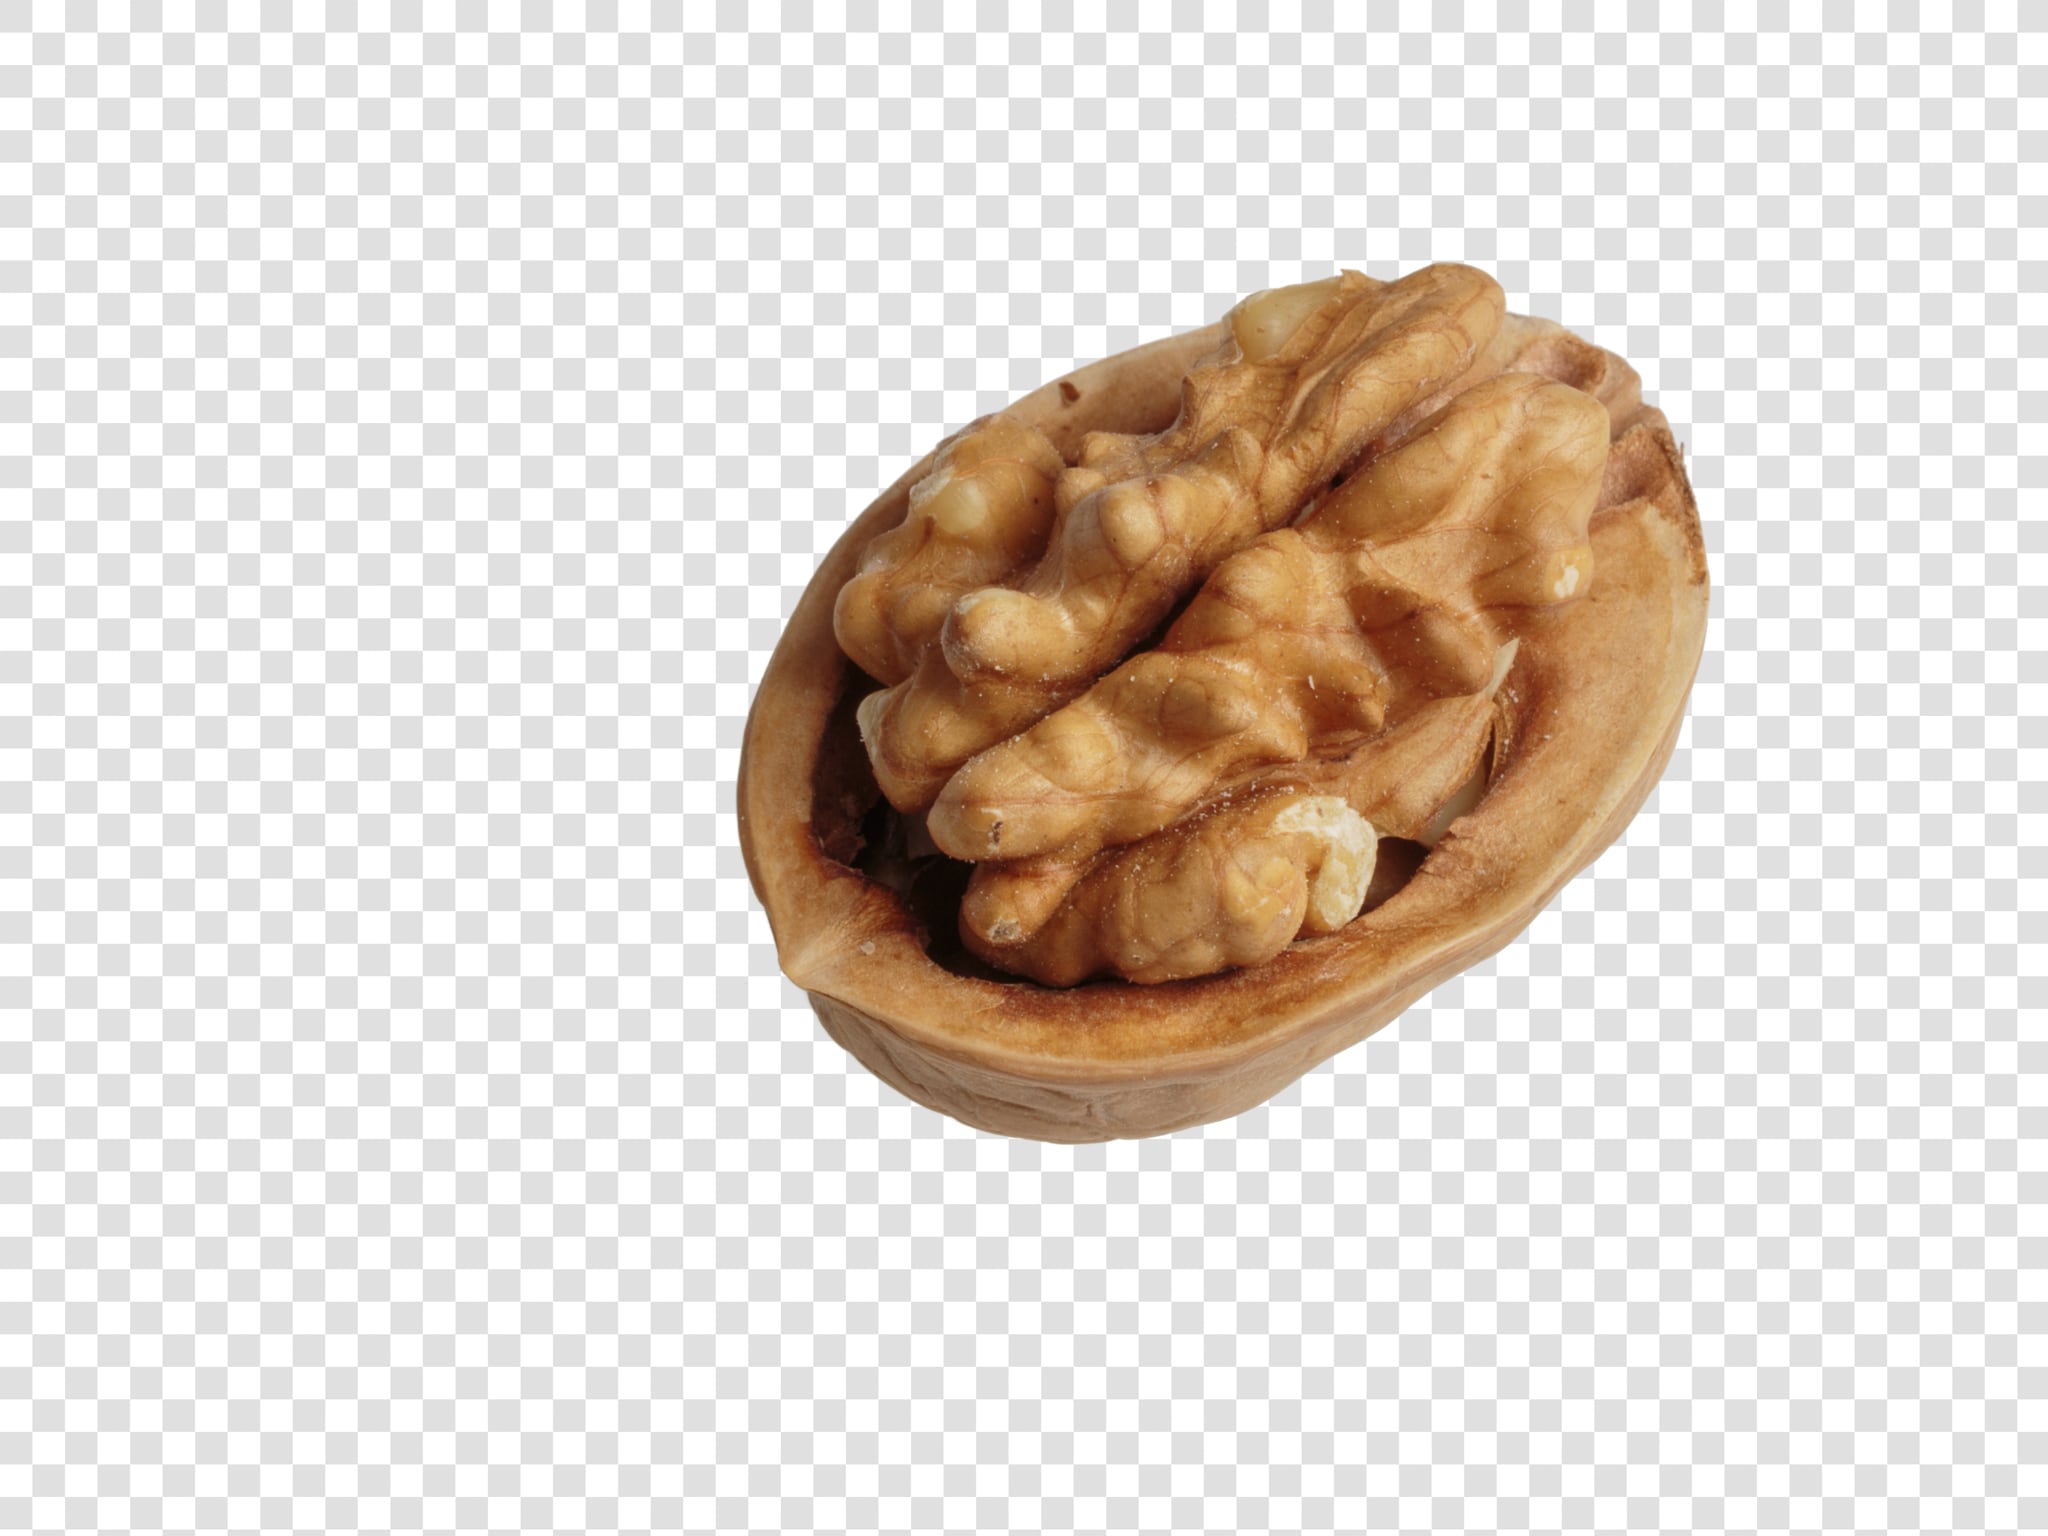 Walnut image asset with transparent background